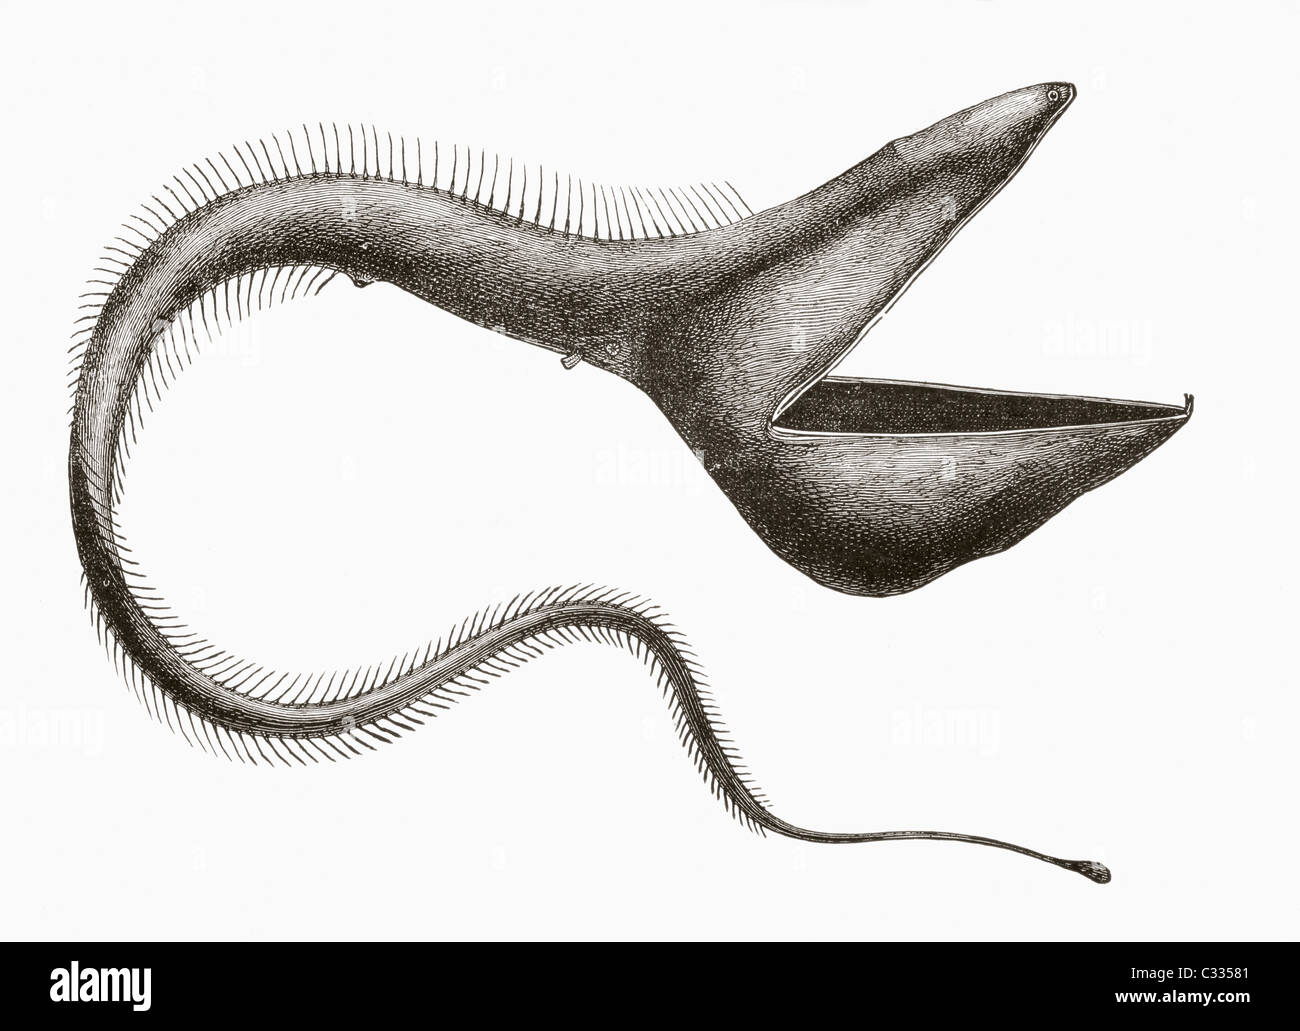 Pelican Eel or Eurypharynx pelecanoides. Deep sea fish rarely seen